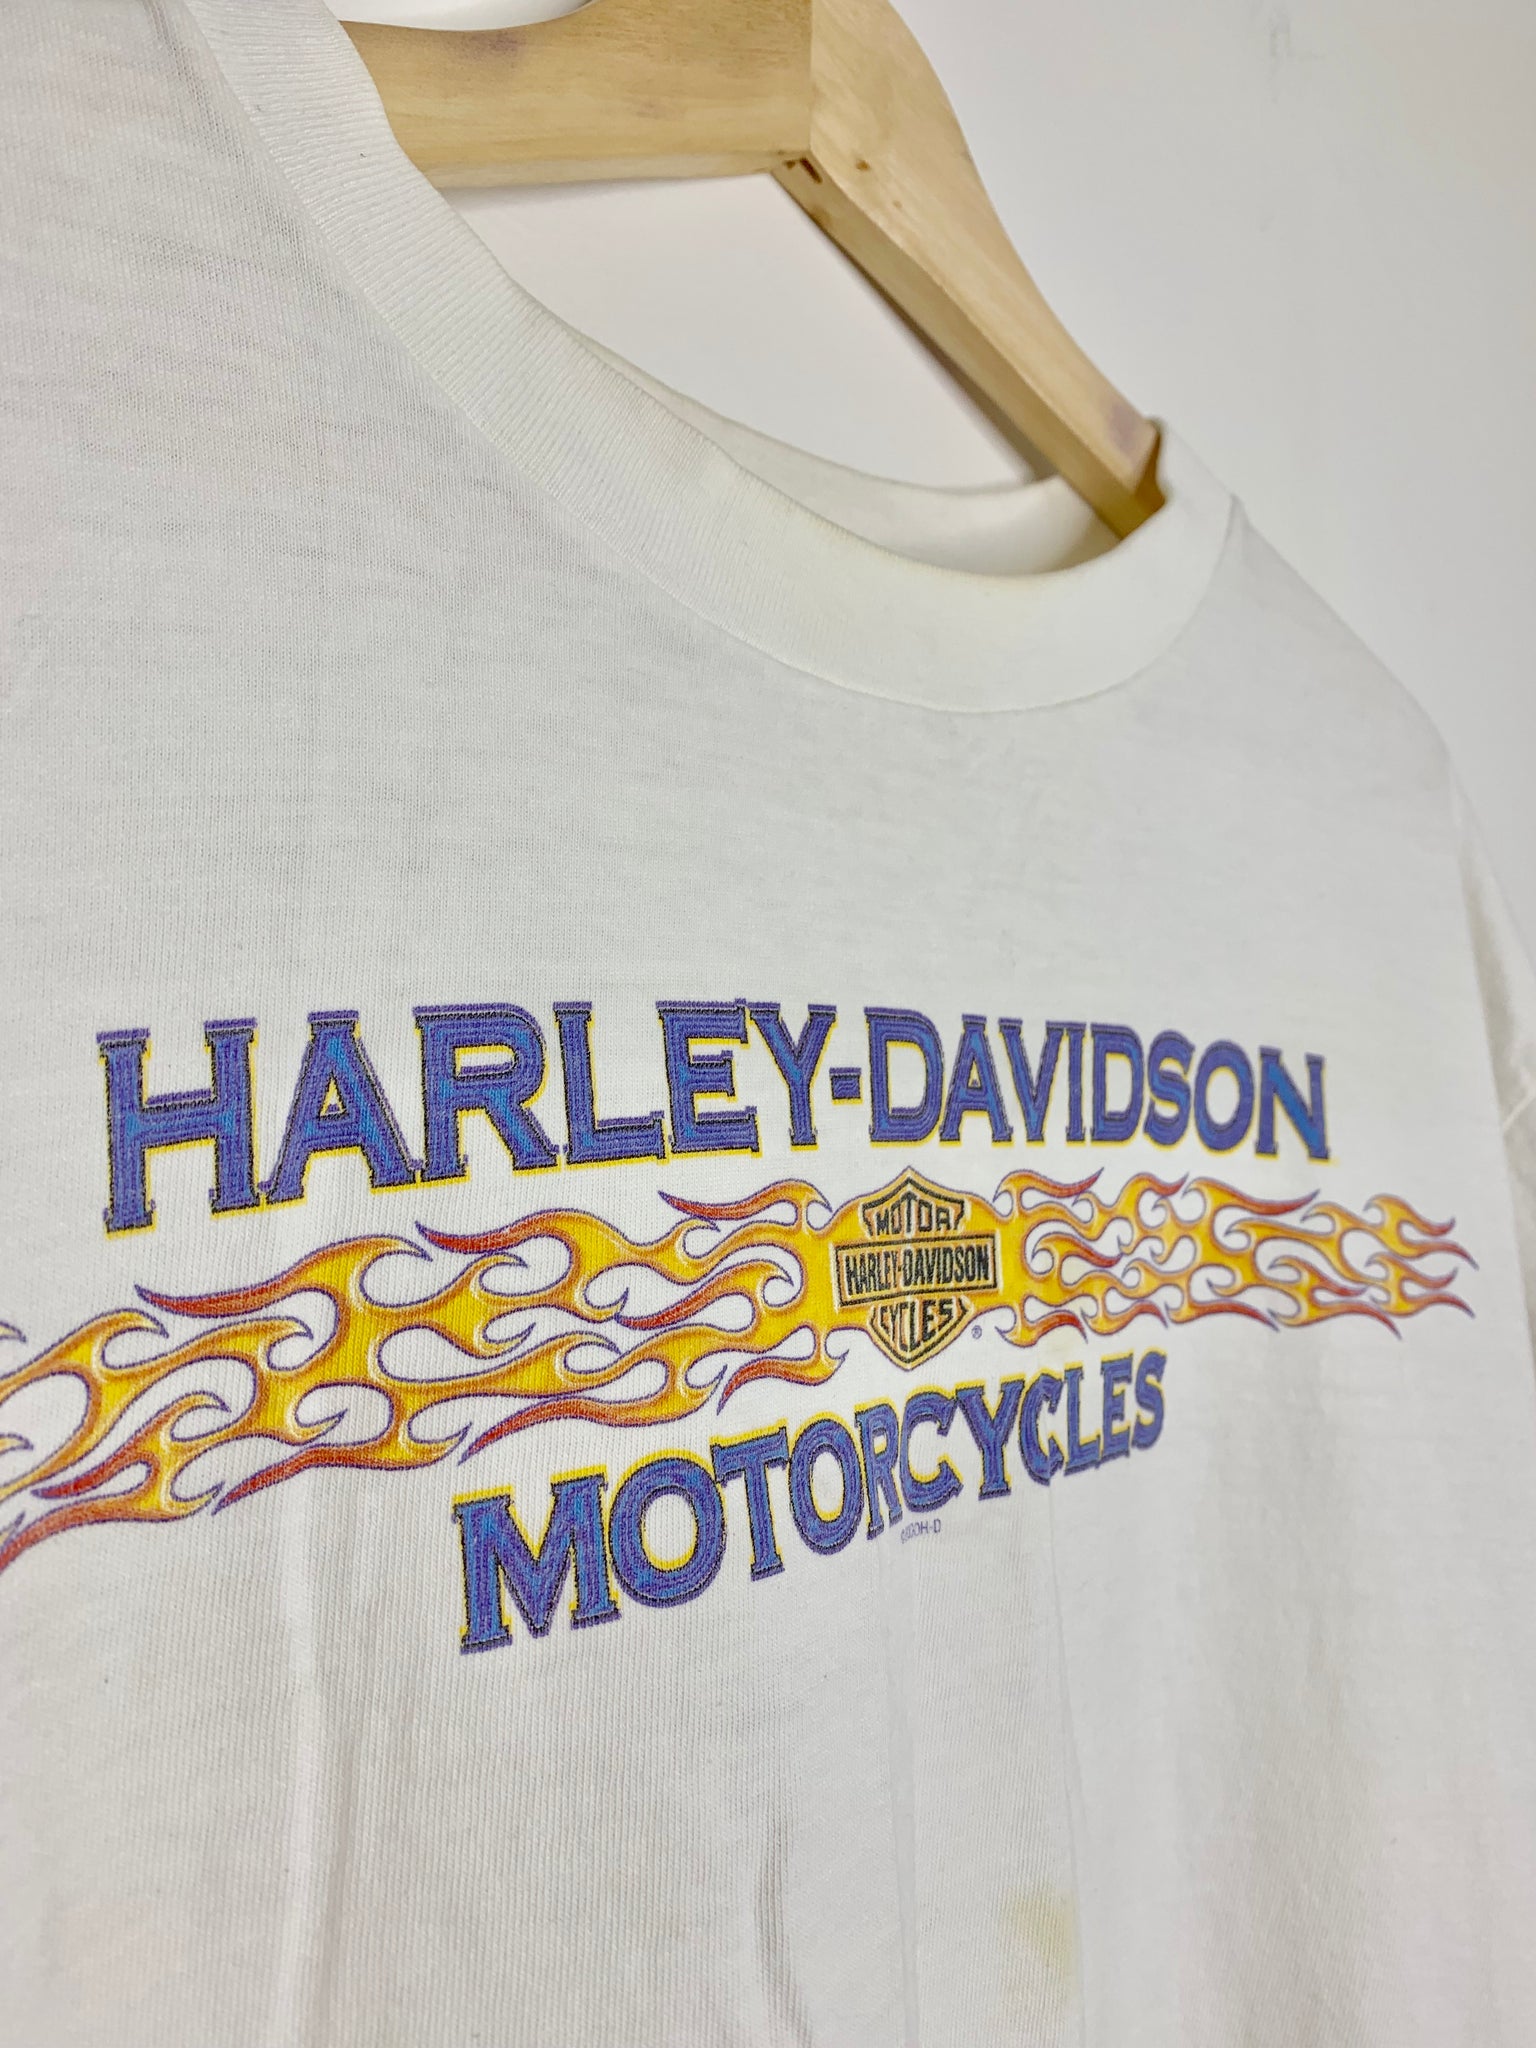 Harley Davidson White T-shirt - Atlanta Georgia chest logo